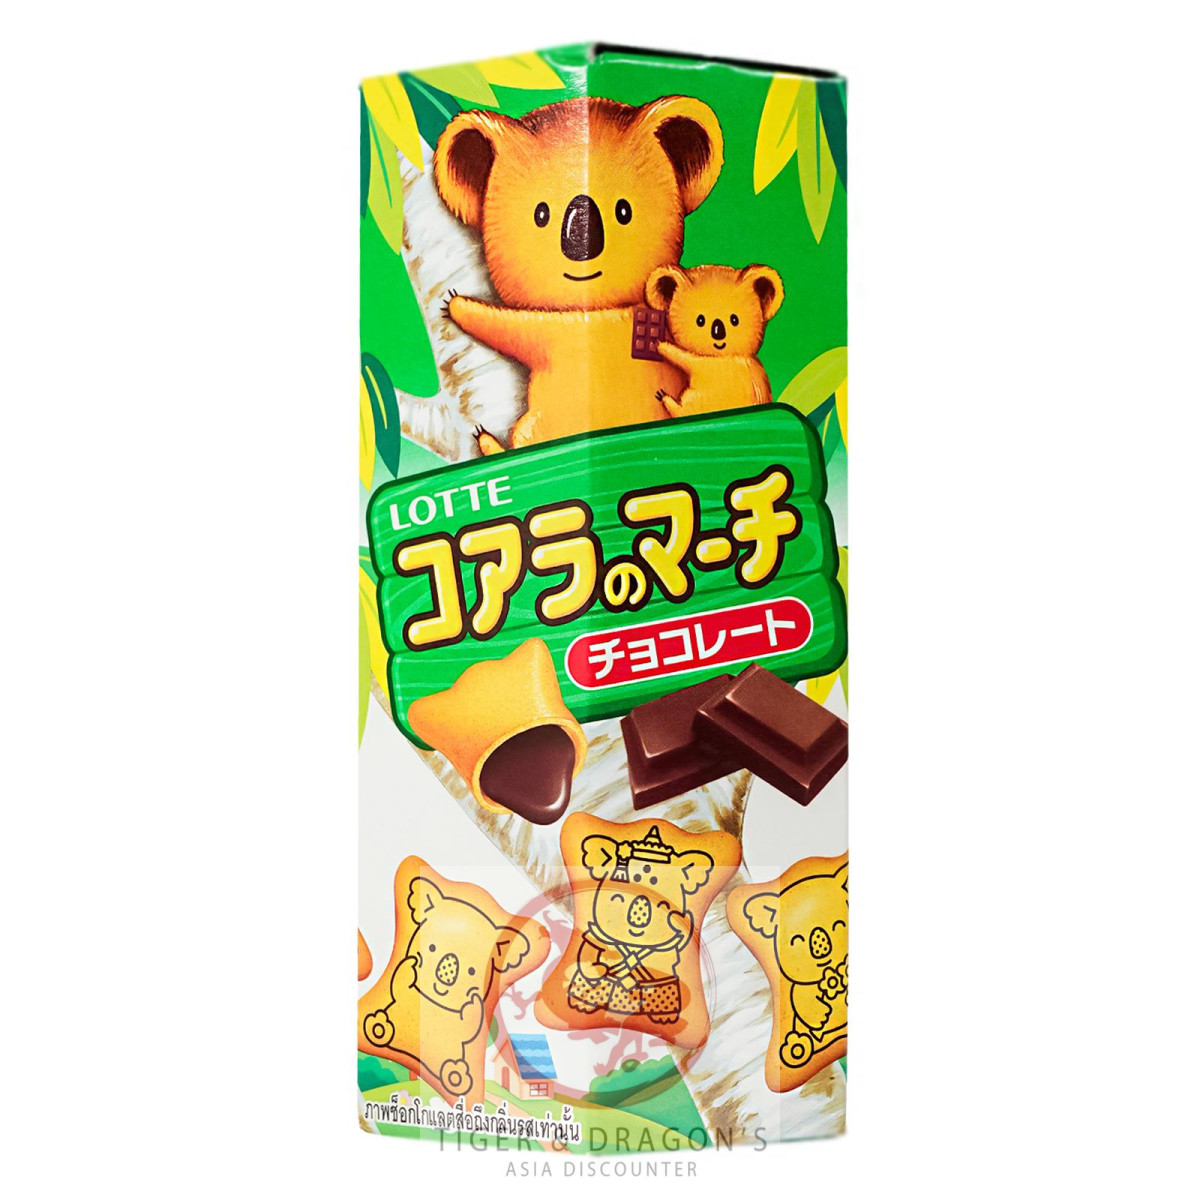 Lotte Koala Biscuit Chocolate Flavor 37g